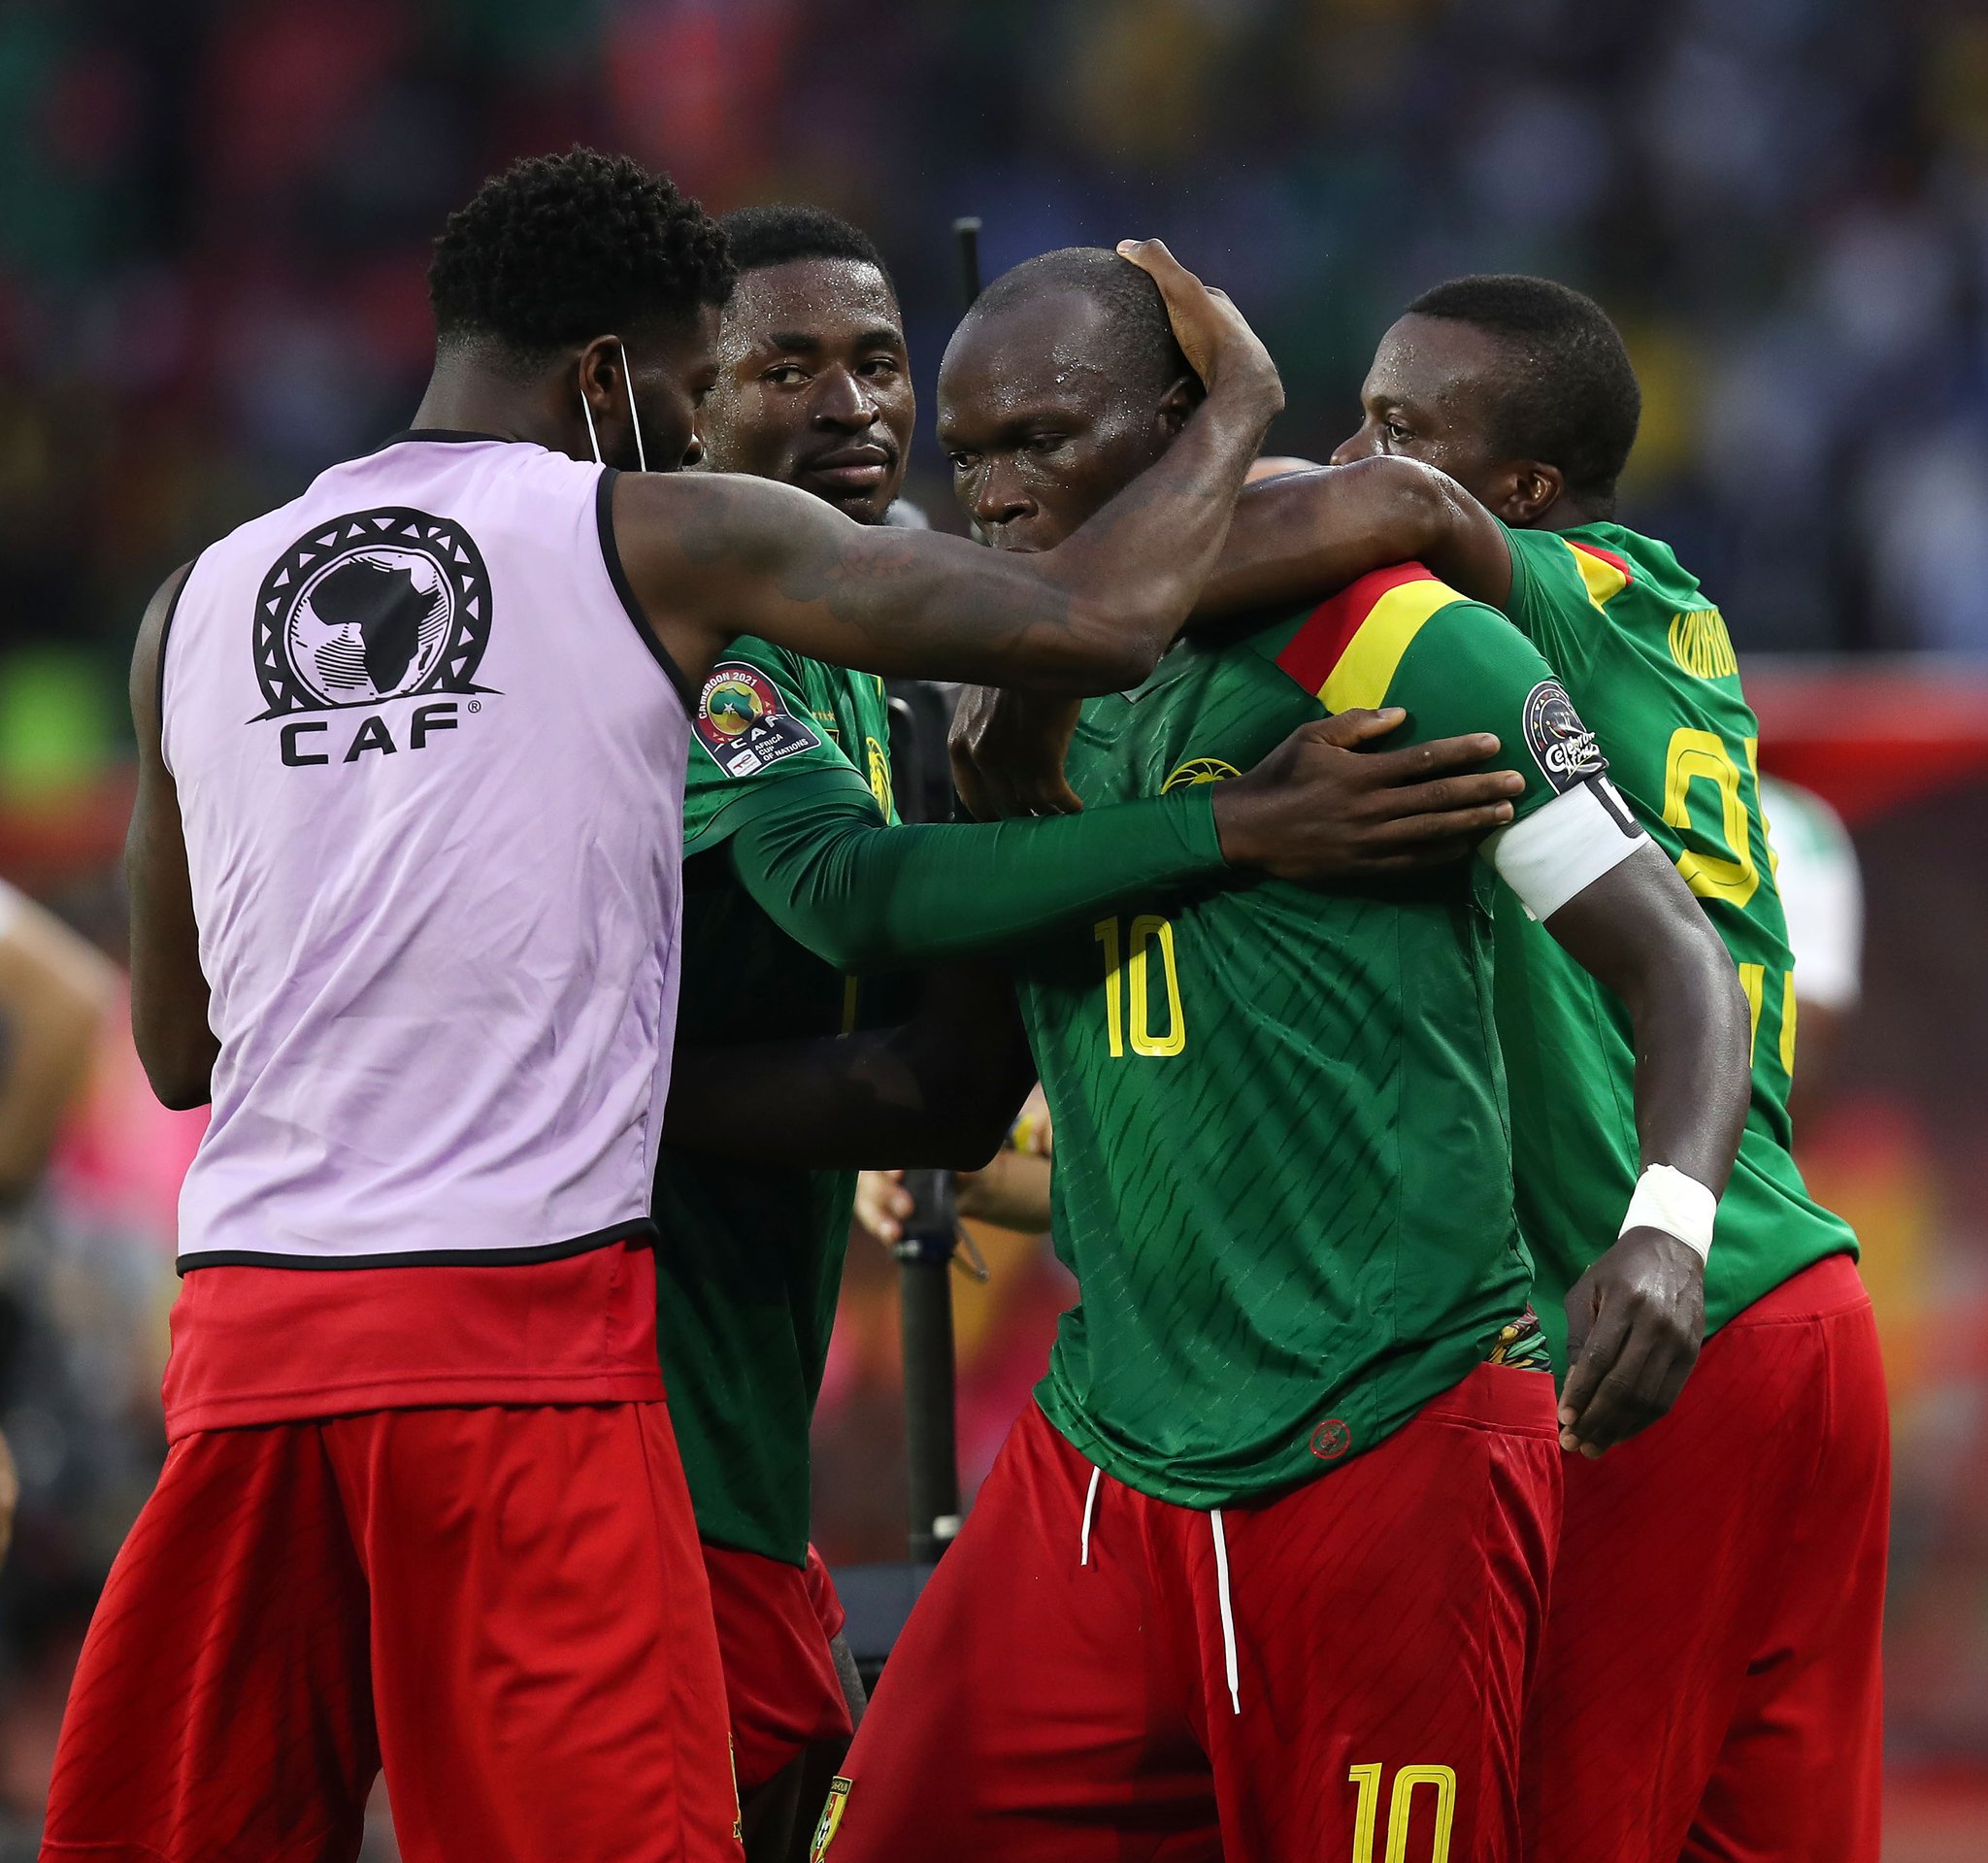 AFCON 2021: Aboubakar Bags Brace Again As Cameroon Thrash Ethiopia, Qualify For Round Of 16